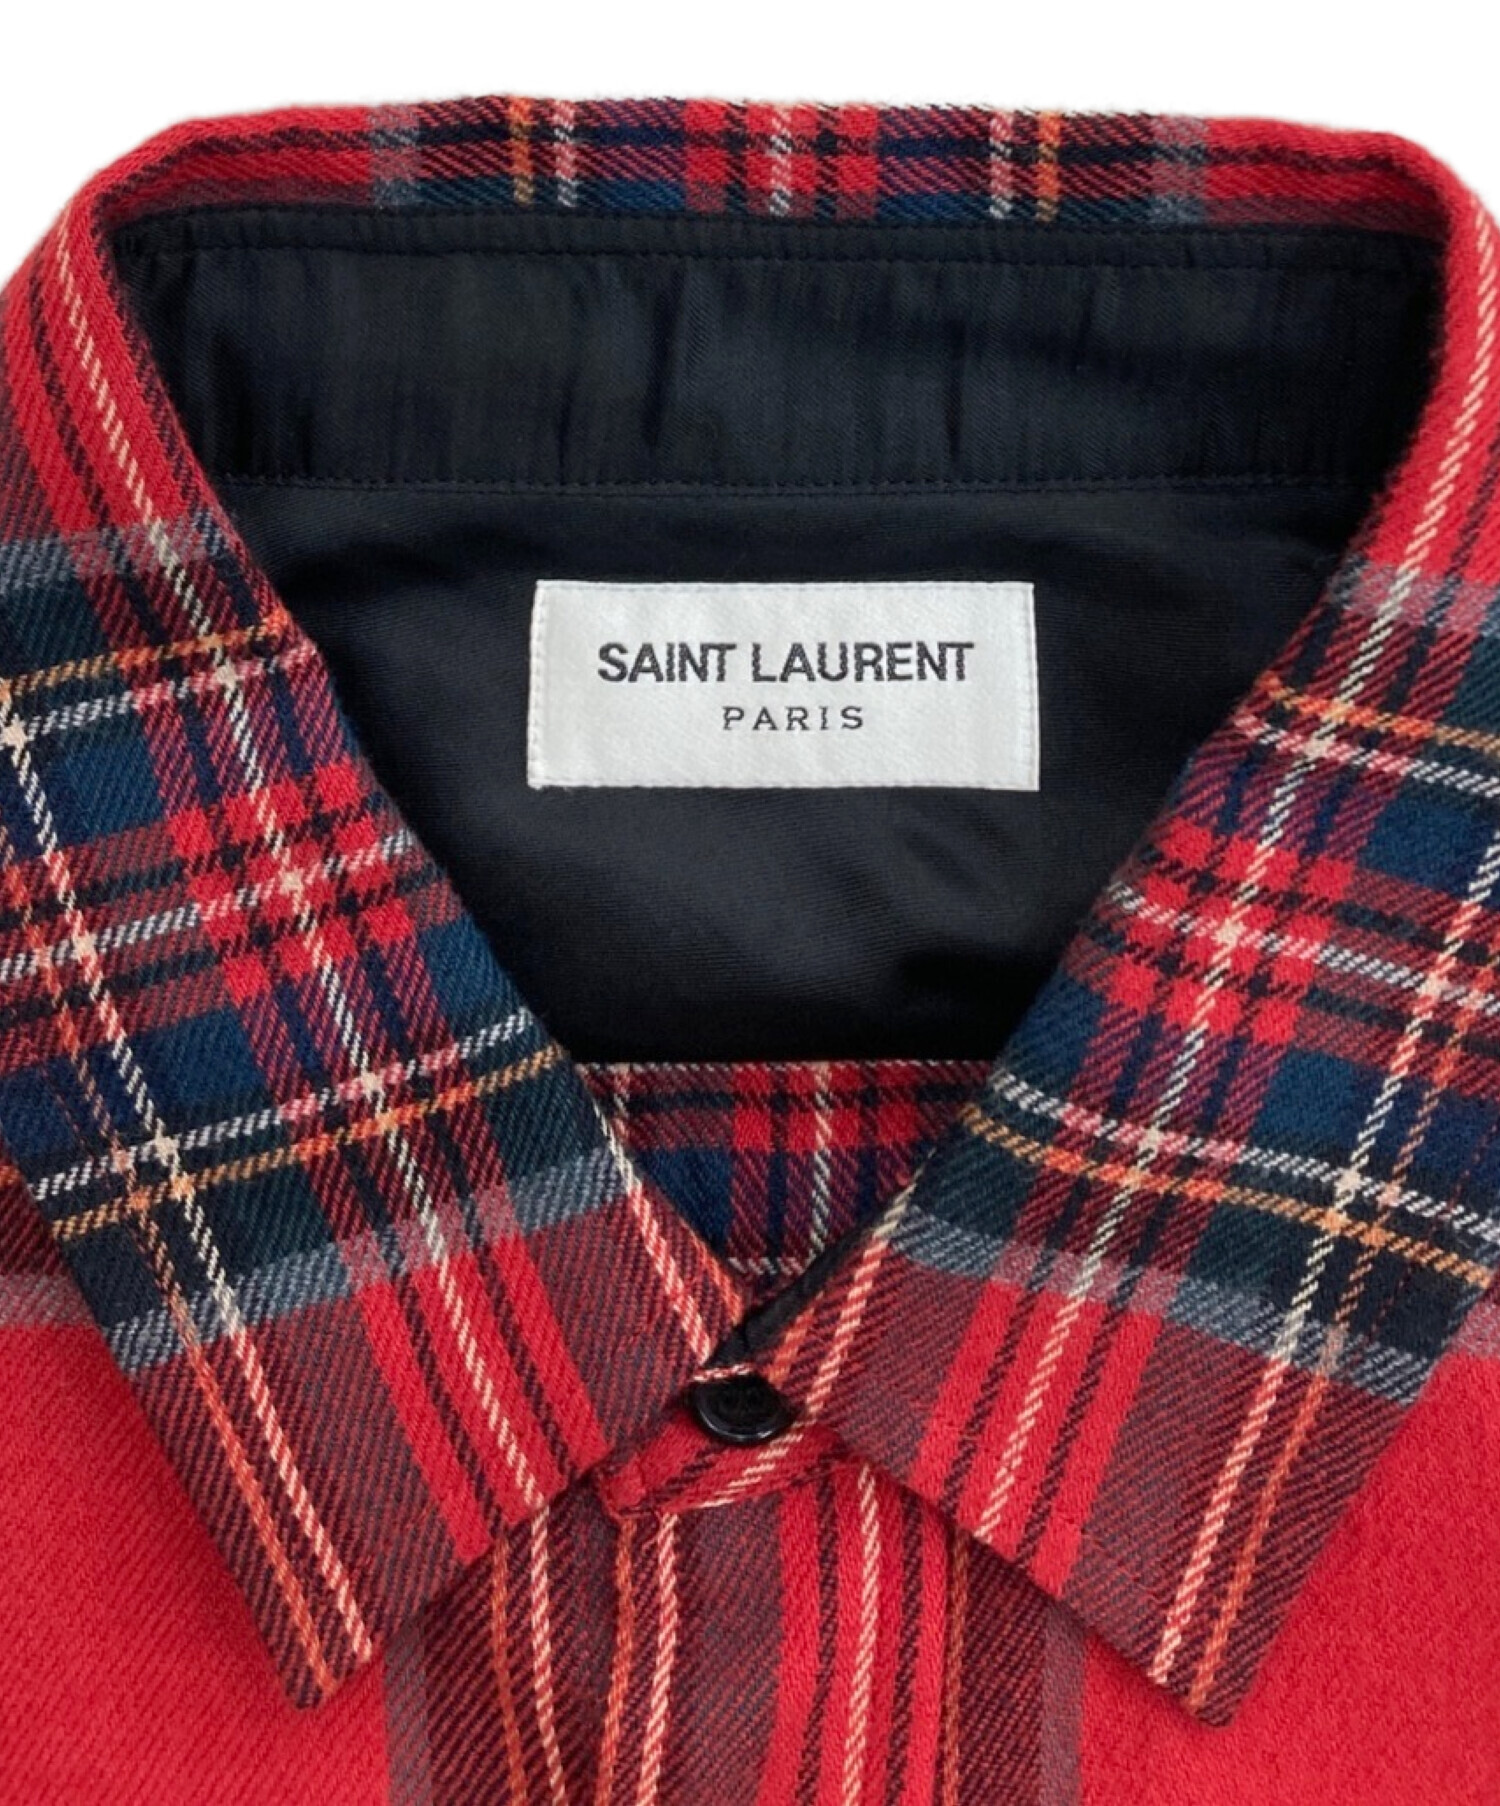 Saint Laurent Paris (サンローランパリ) タータンチェックシャツ レッド サイズ:41